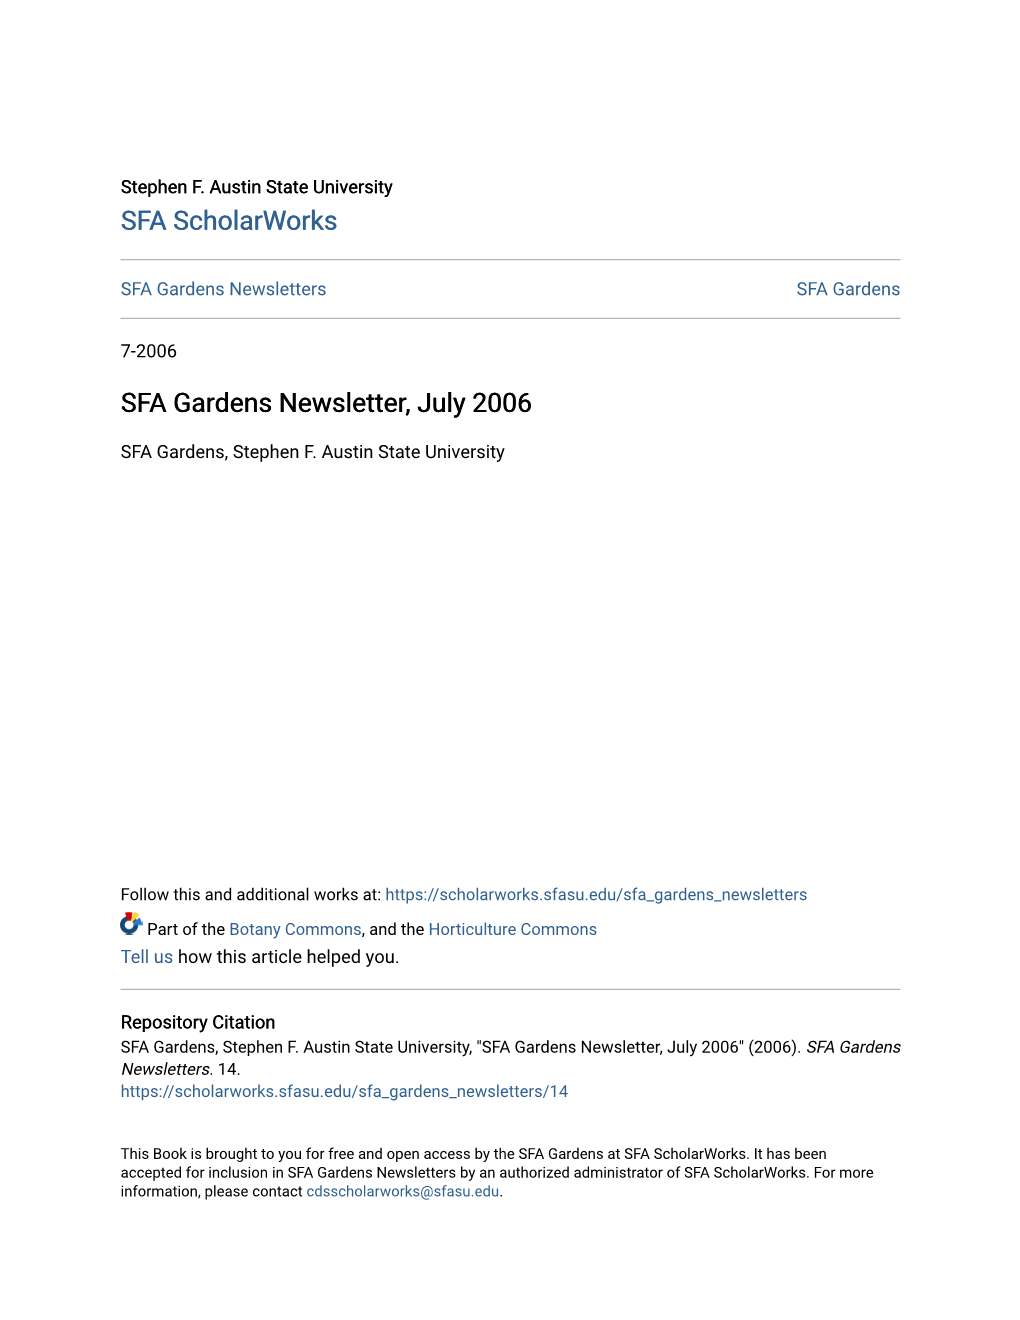 SFA Gardens Newsletter, July 2006